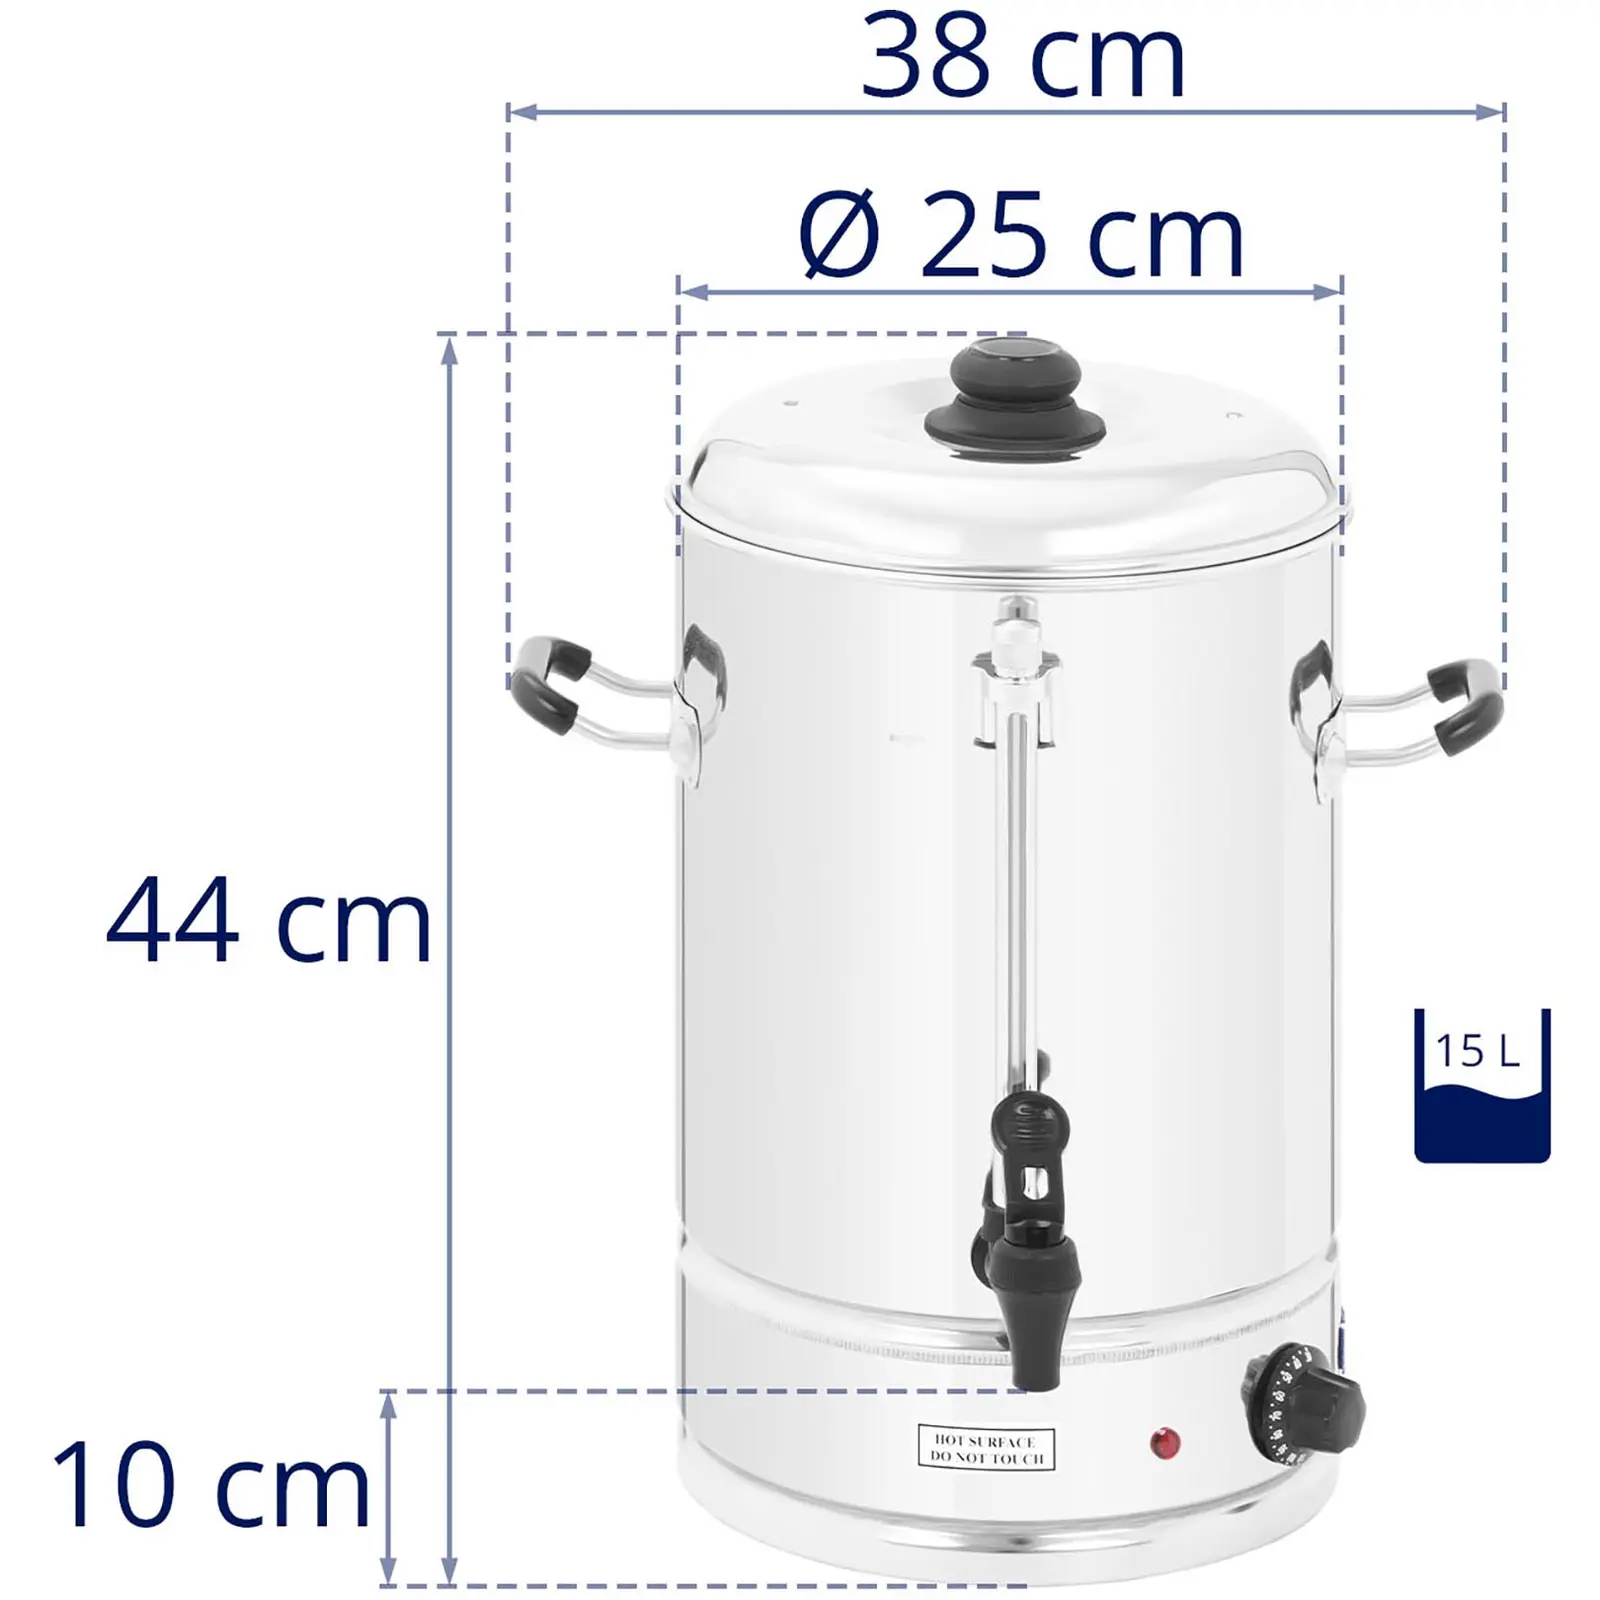 Chaleira - 15 litros - 2500 W